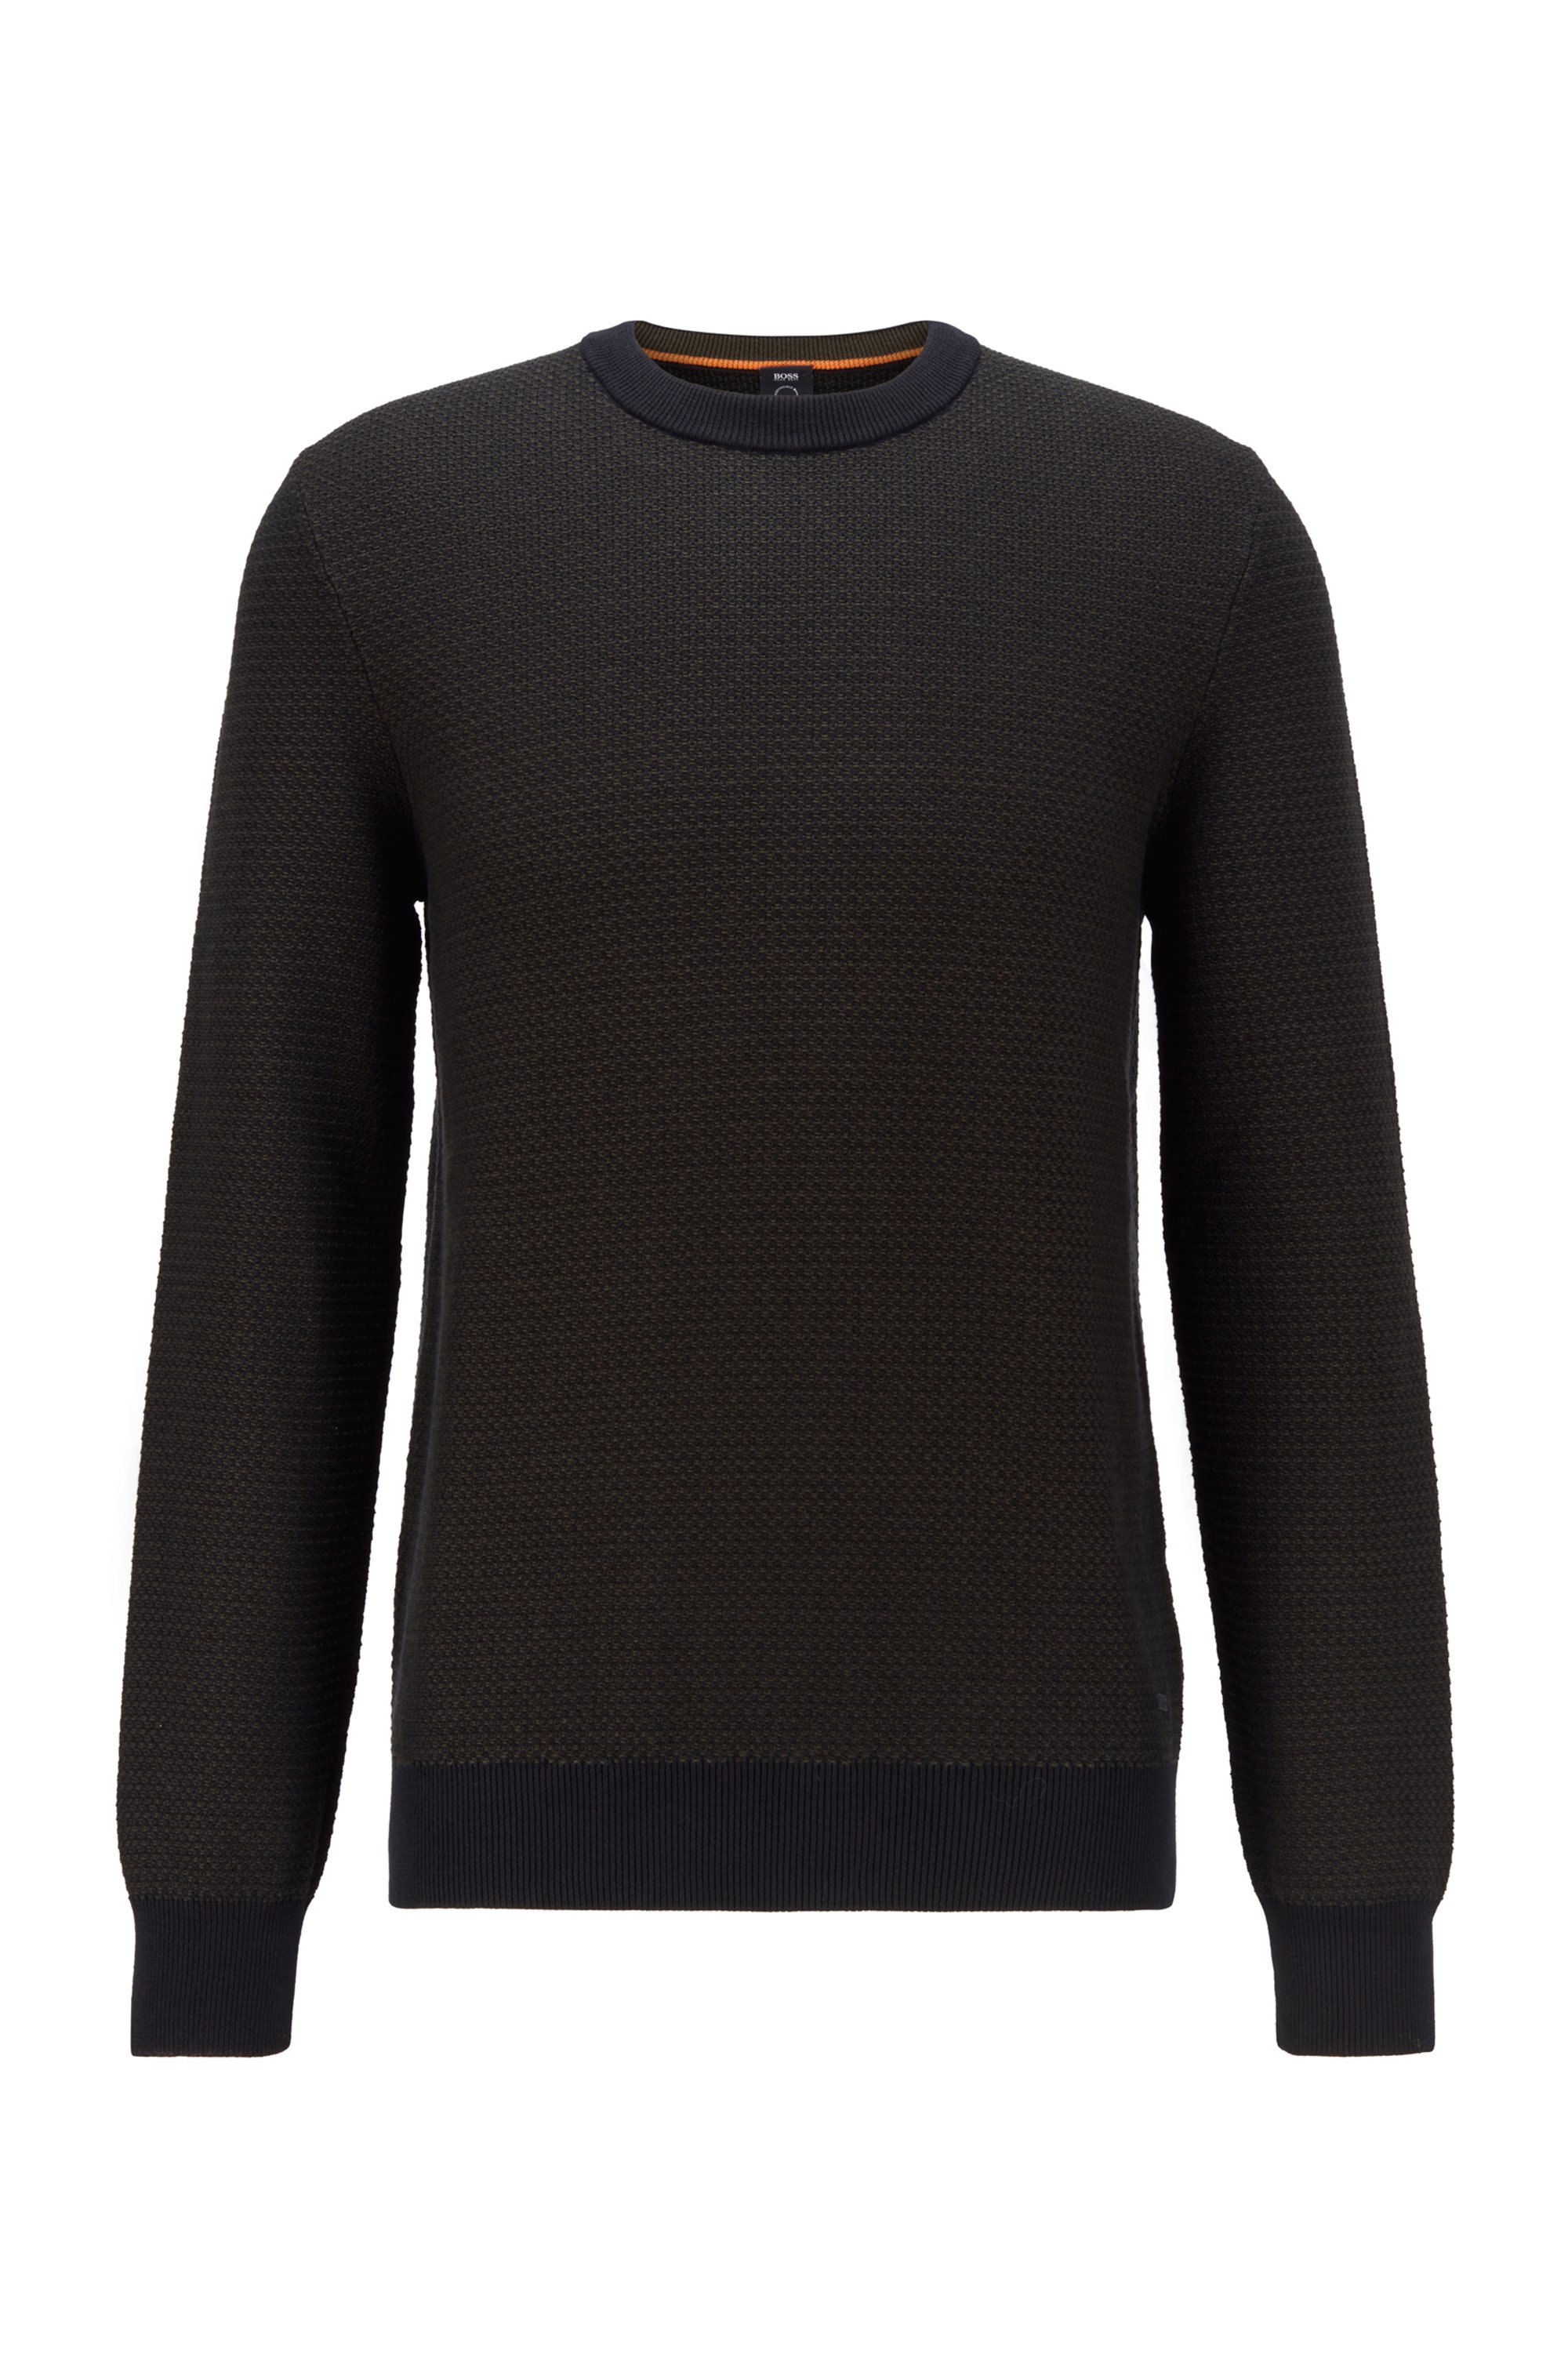 Regular-fit sweater in a cotton-kapok blend, Black